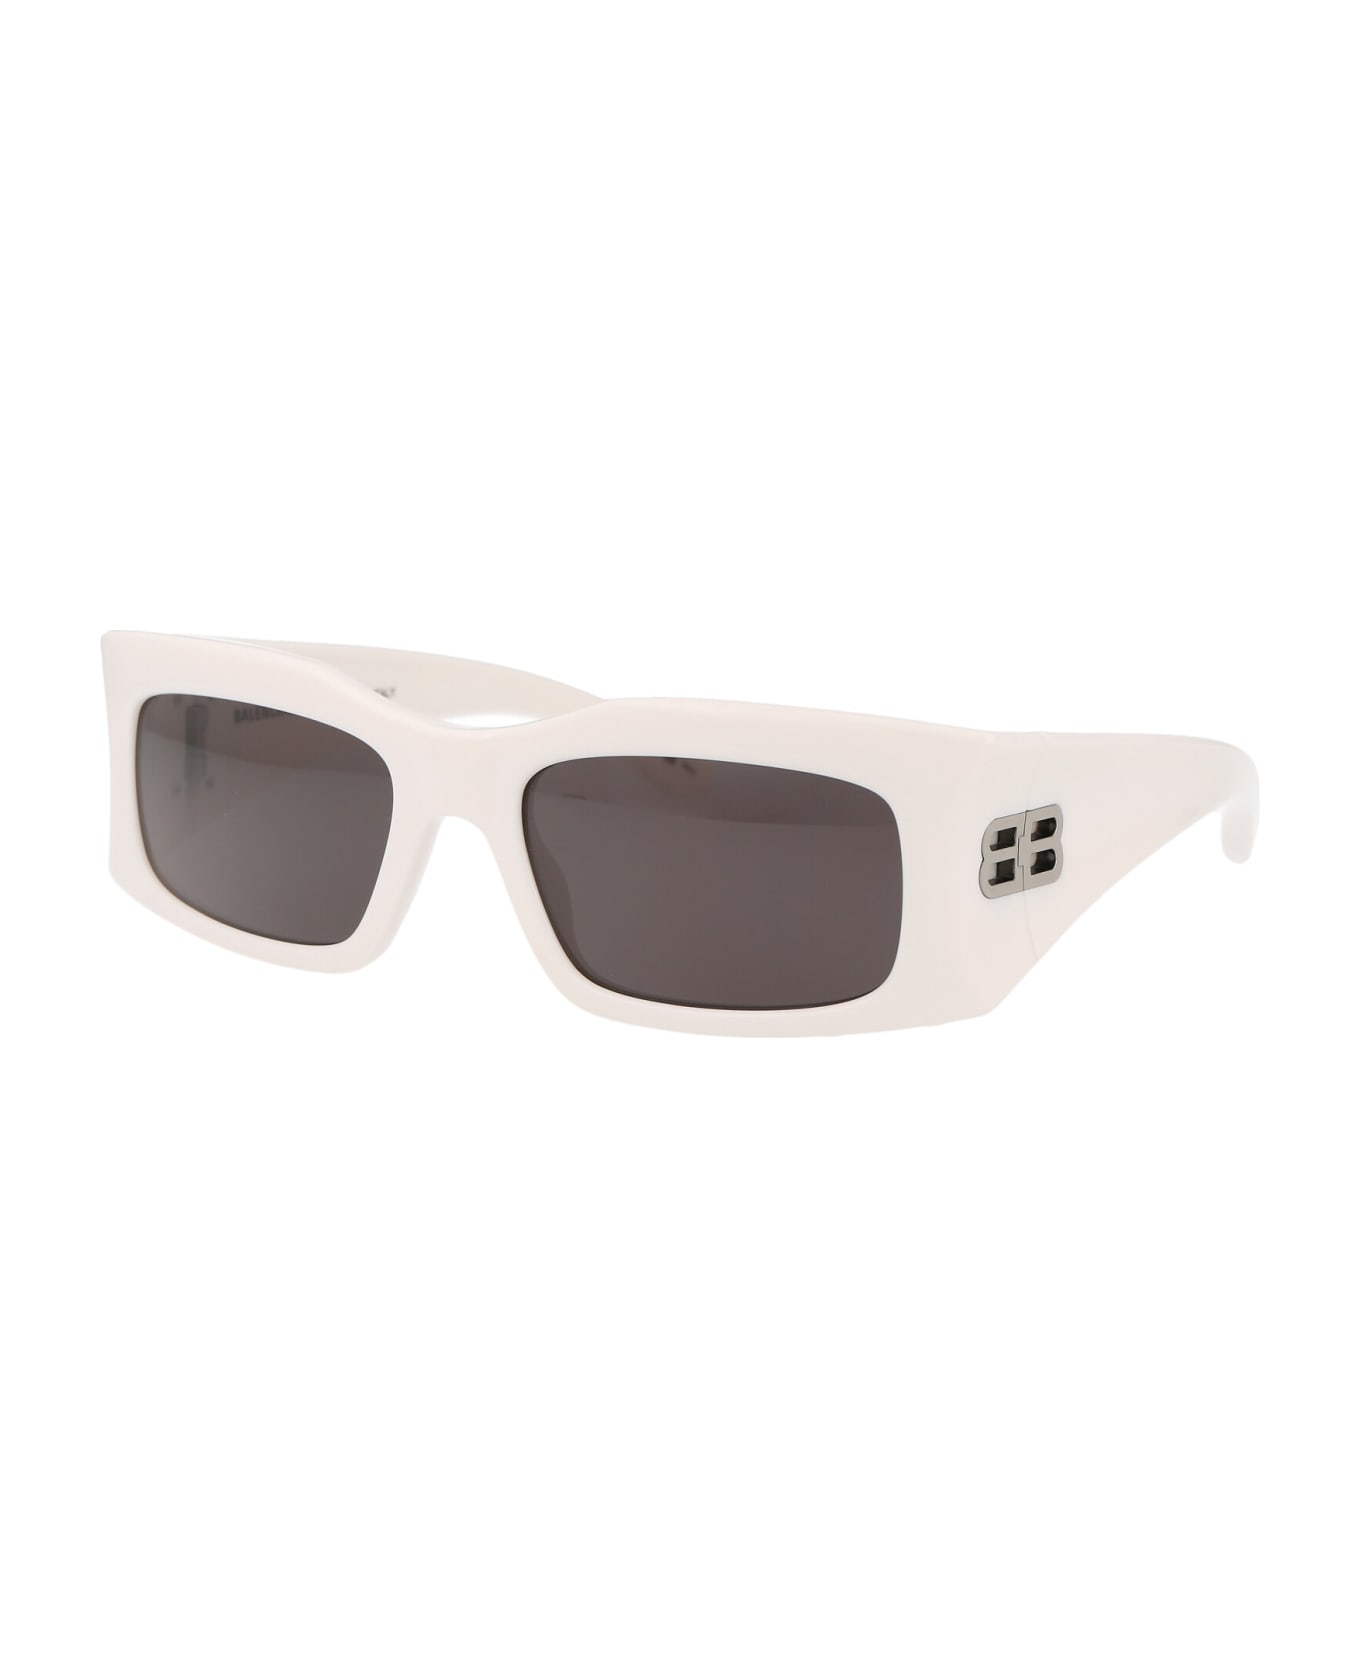 Balenciaga Eyewear Bb0291s Sunglasses - 004 IVORY IVORY GREY